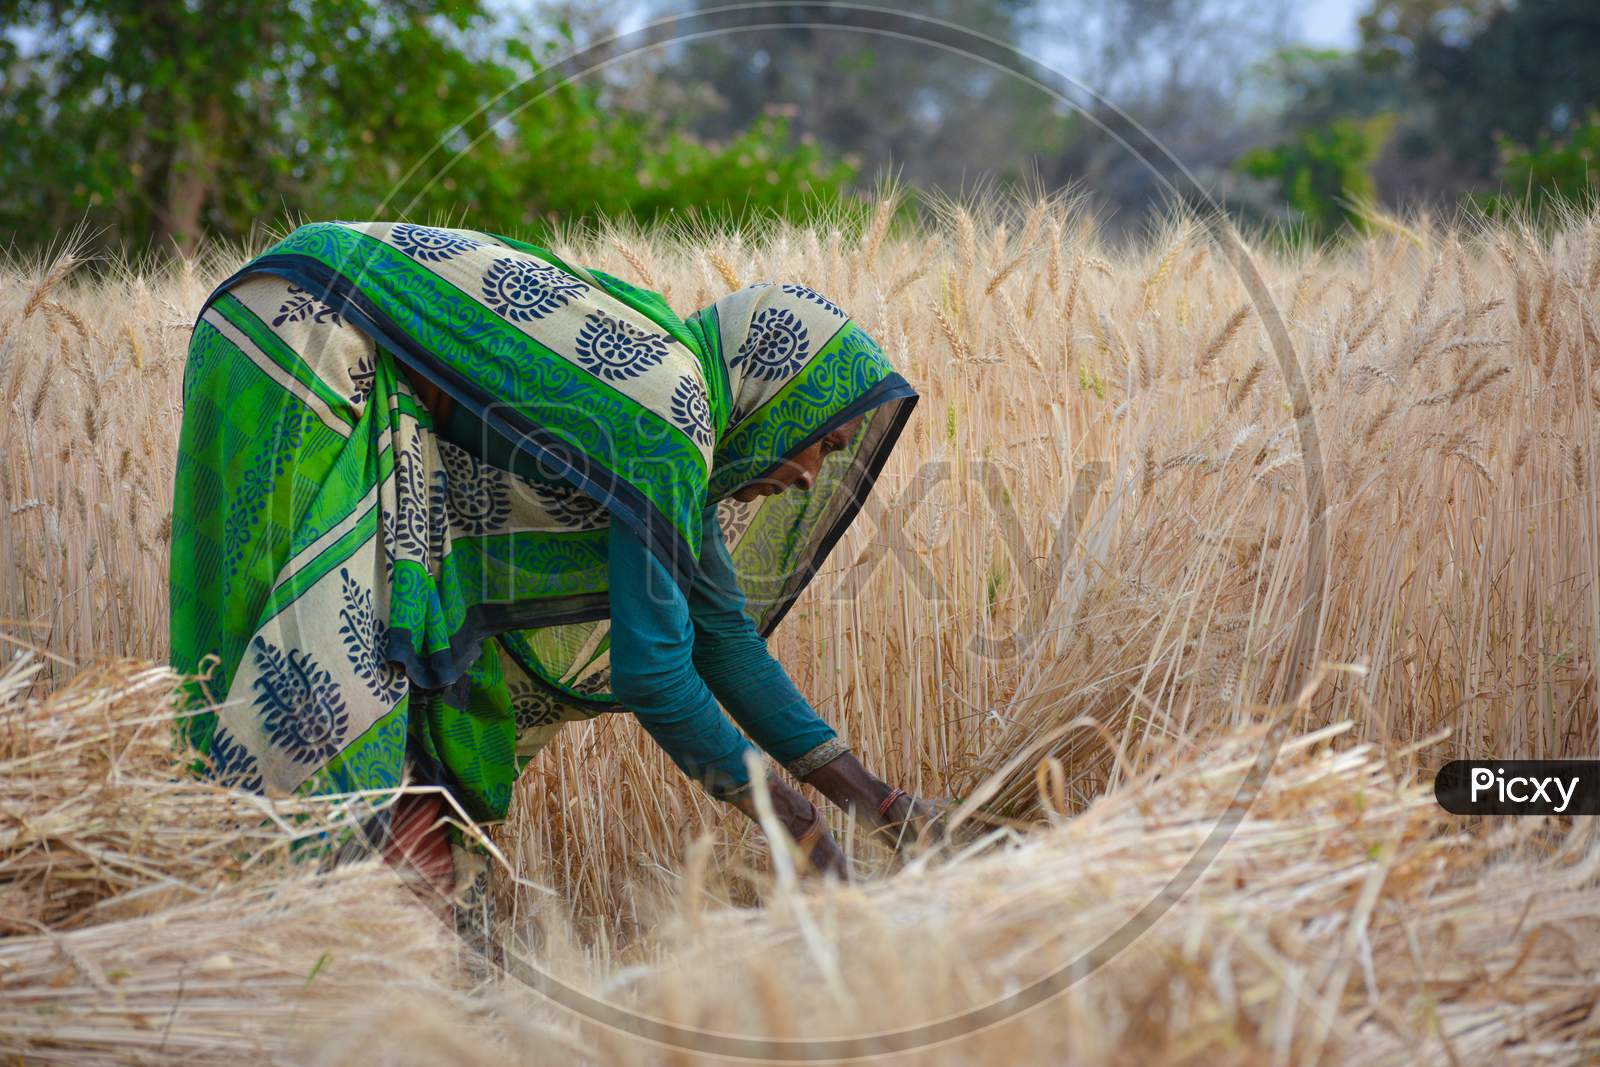 TIKAMGARH, MADHYA PRADESH, INDIA - MARCH 20, 2020: Indian woman cutting wheat with sickle.